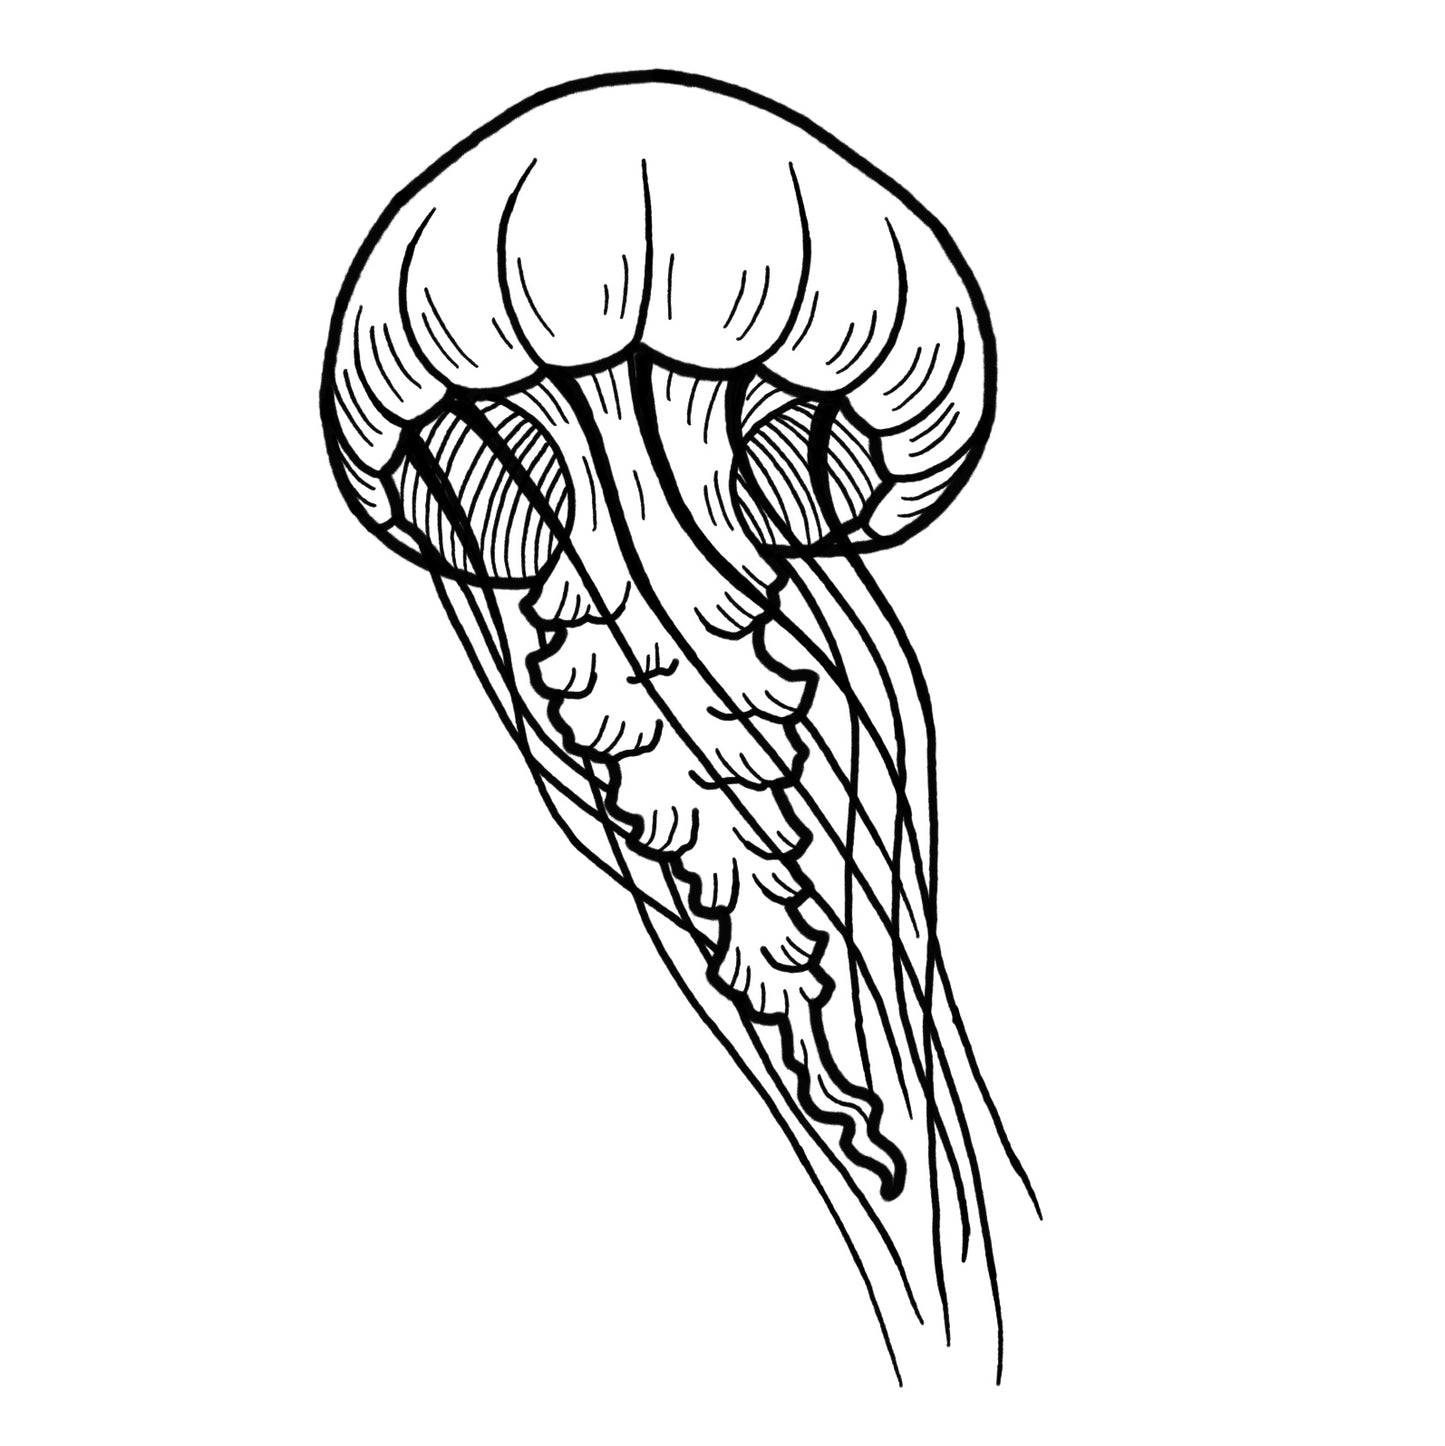 Jellyfish - Blackwork